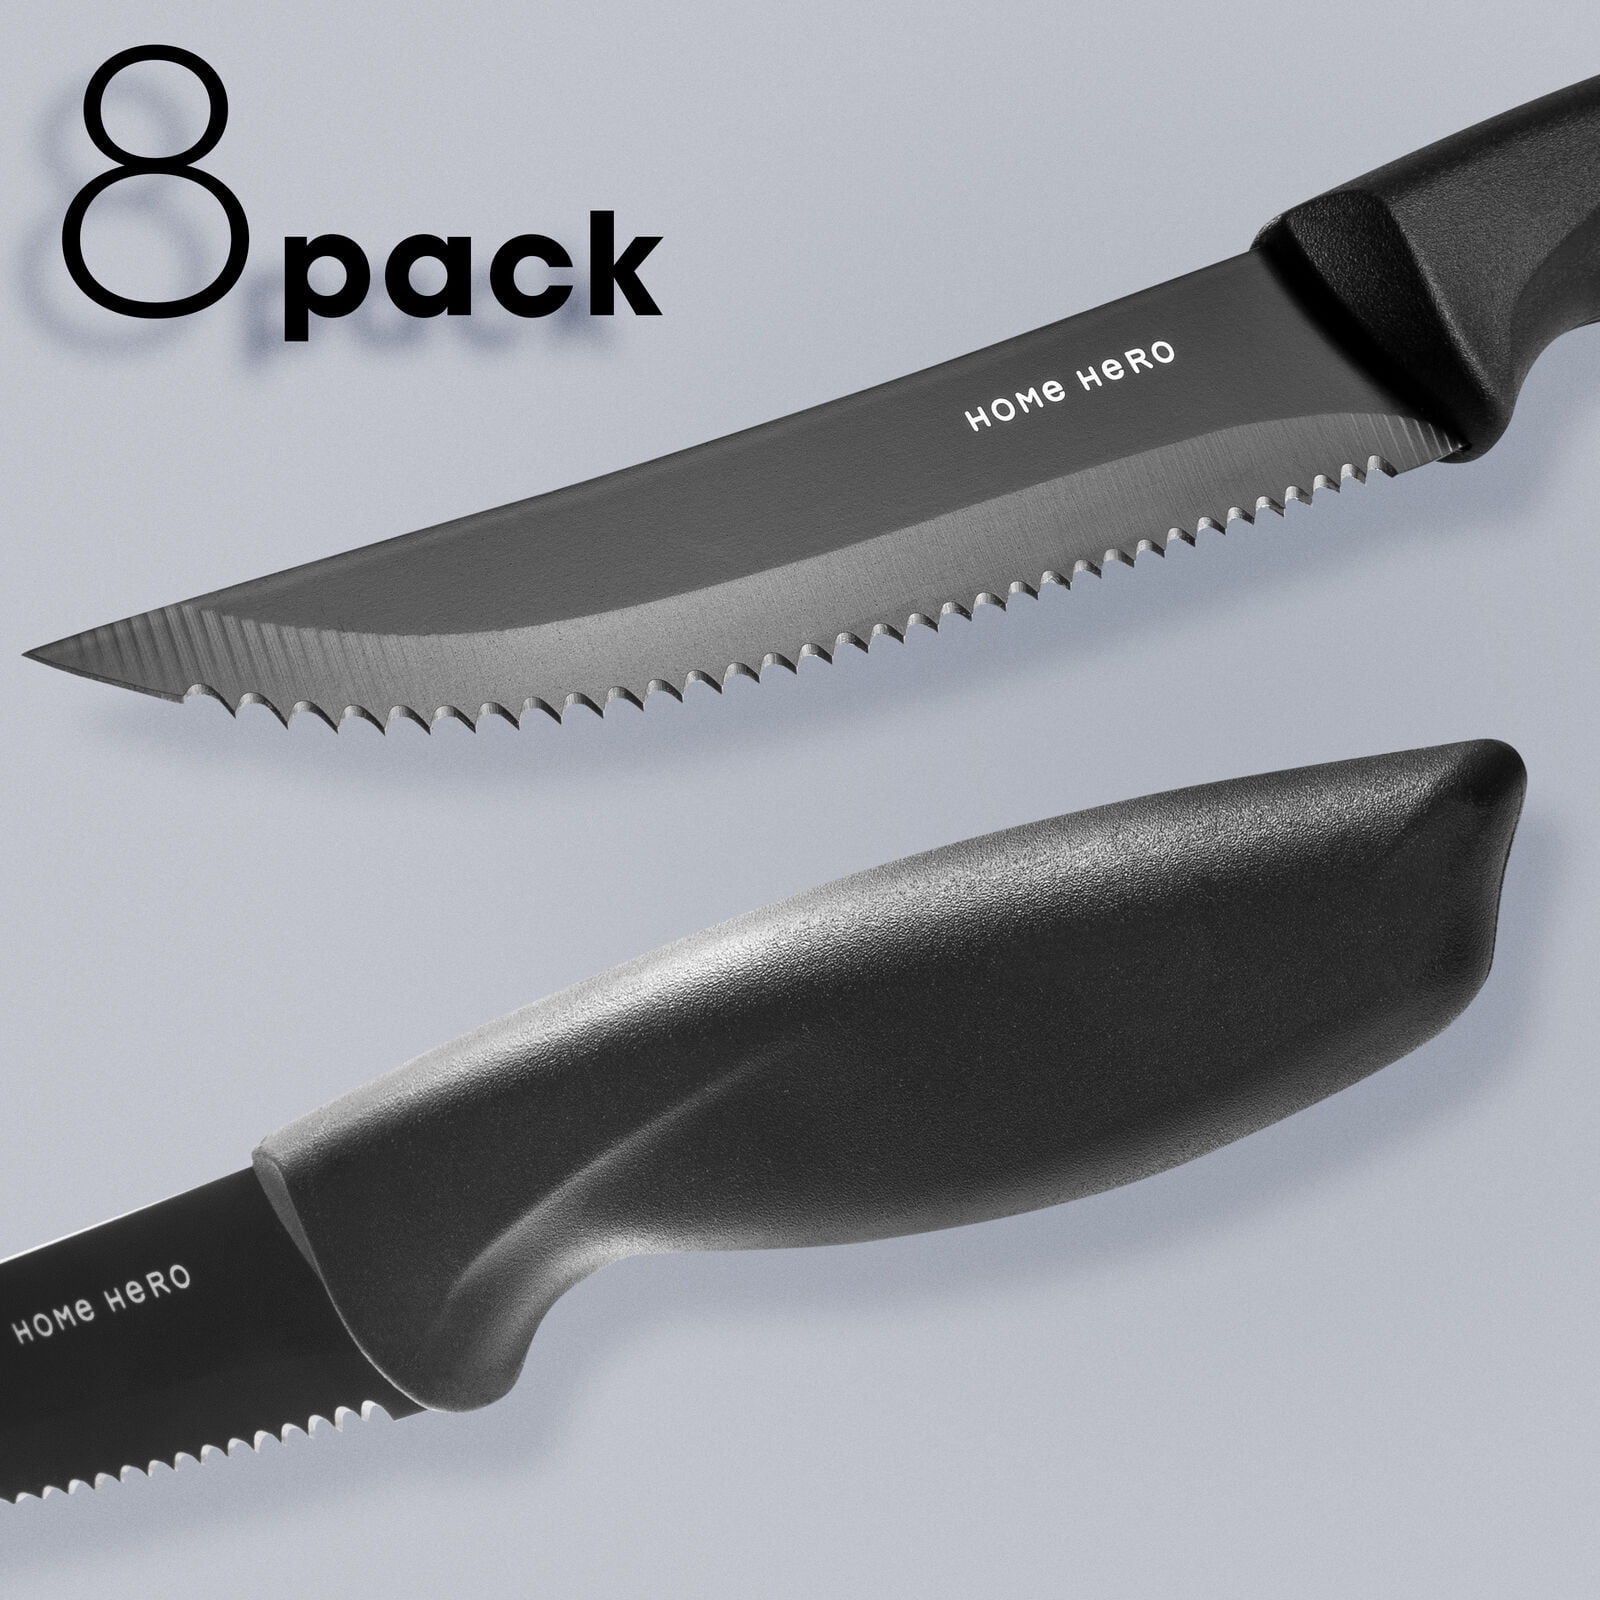 Black Kitchen Knife – 6” All Purpose Steak and Vegetable Knife